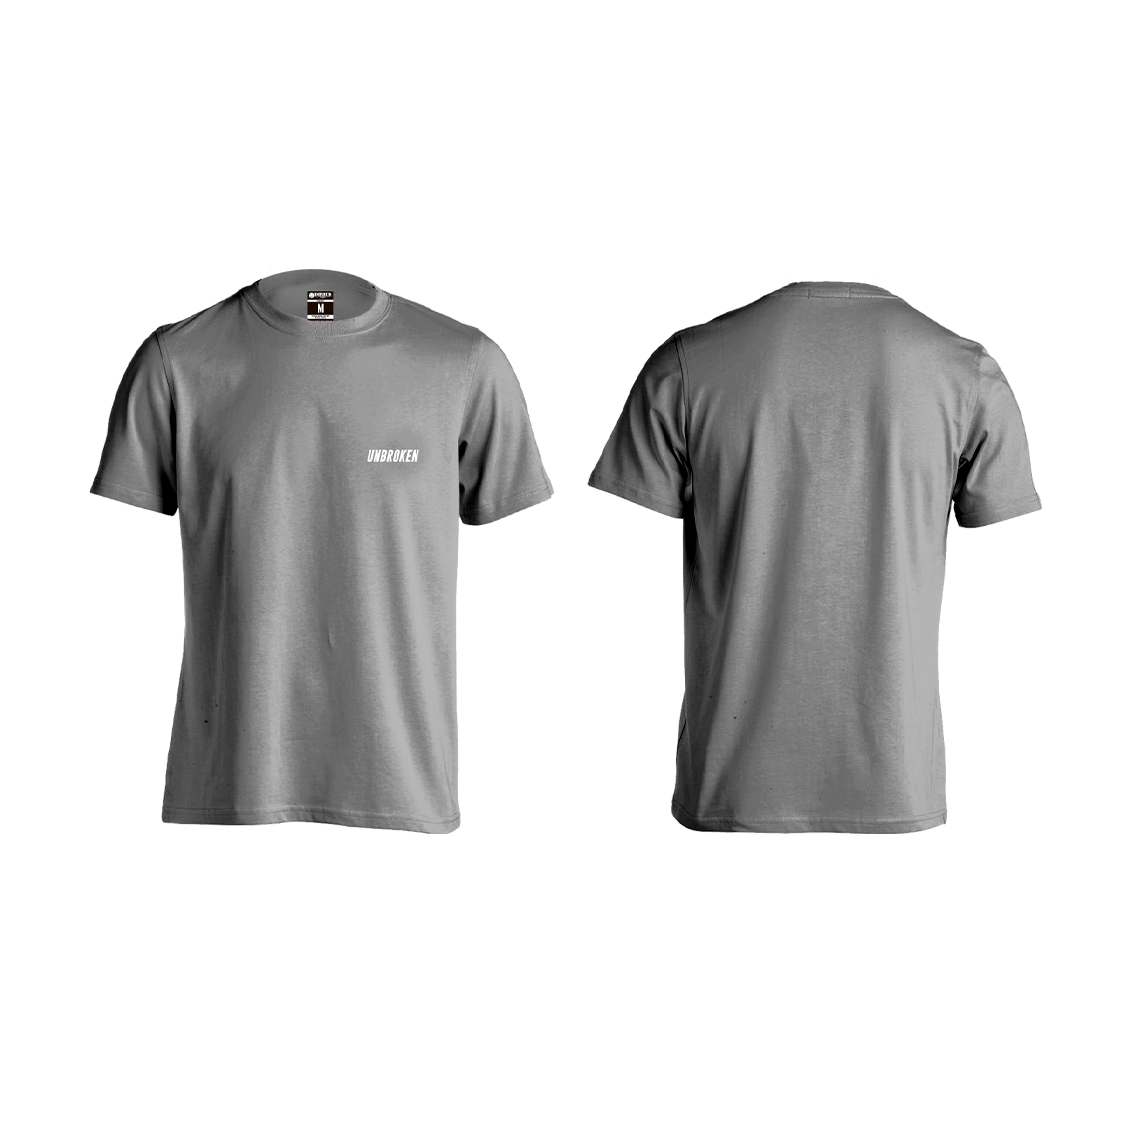 Camiseta Unbroken basic grey - Unbroken Sports Wear 